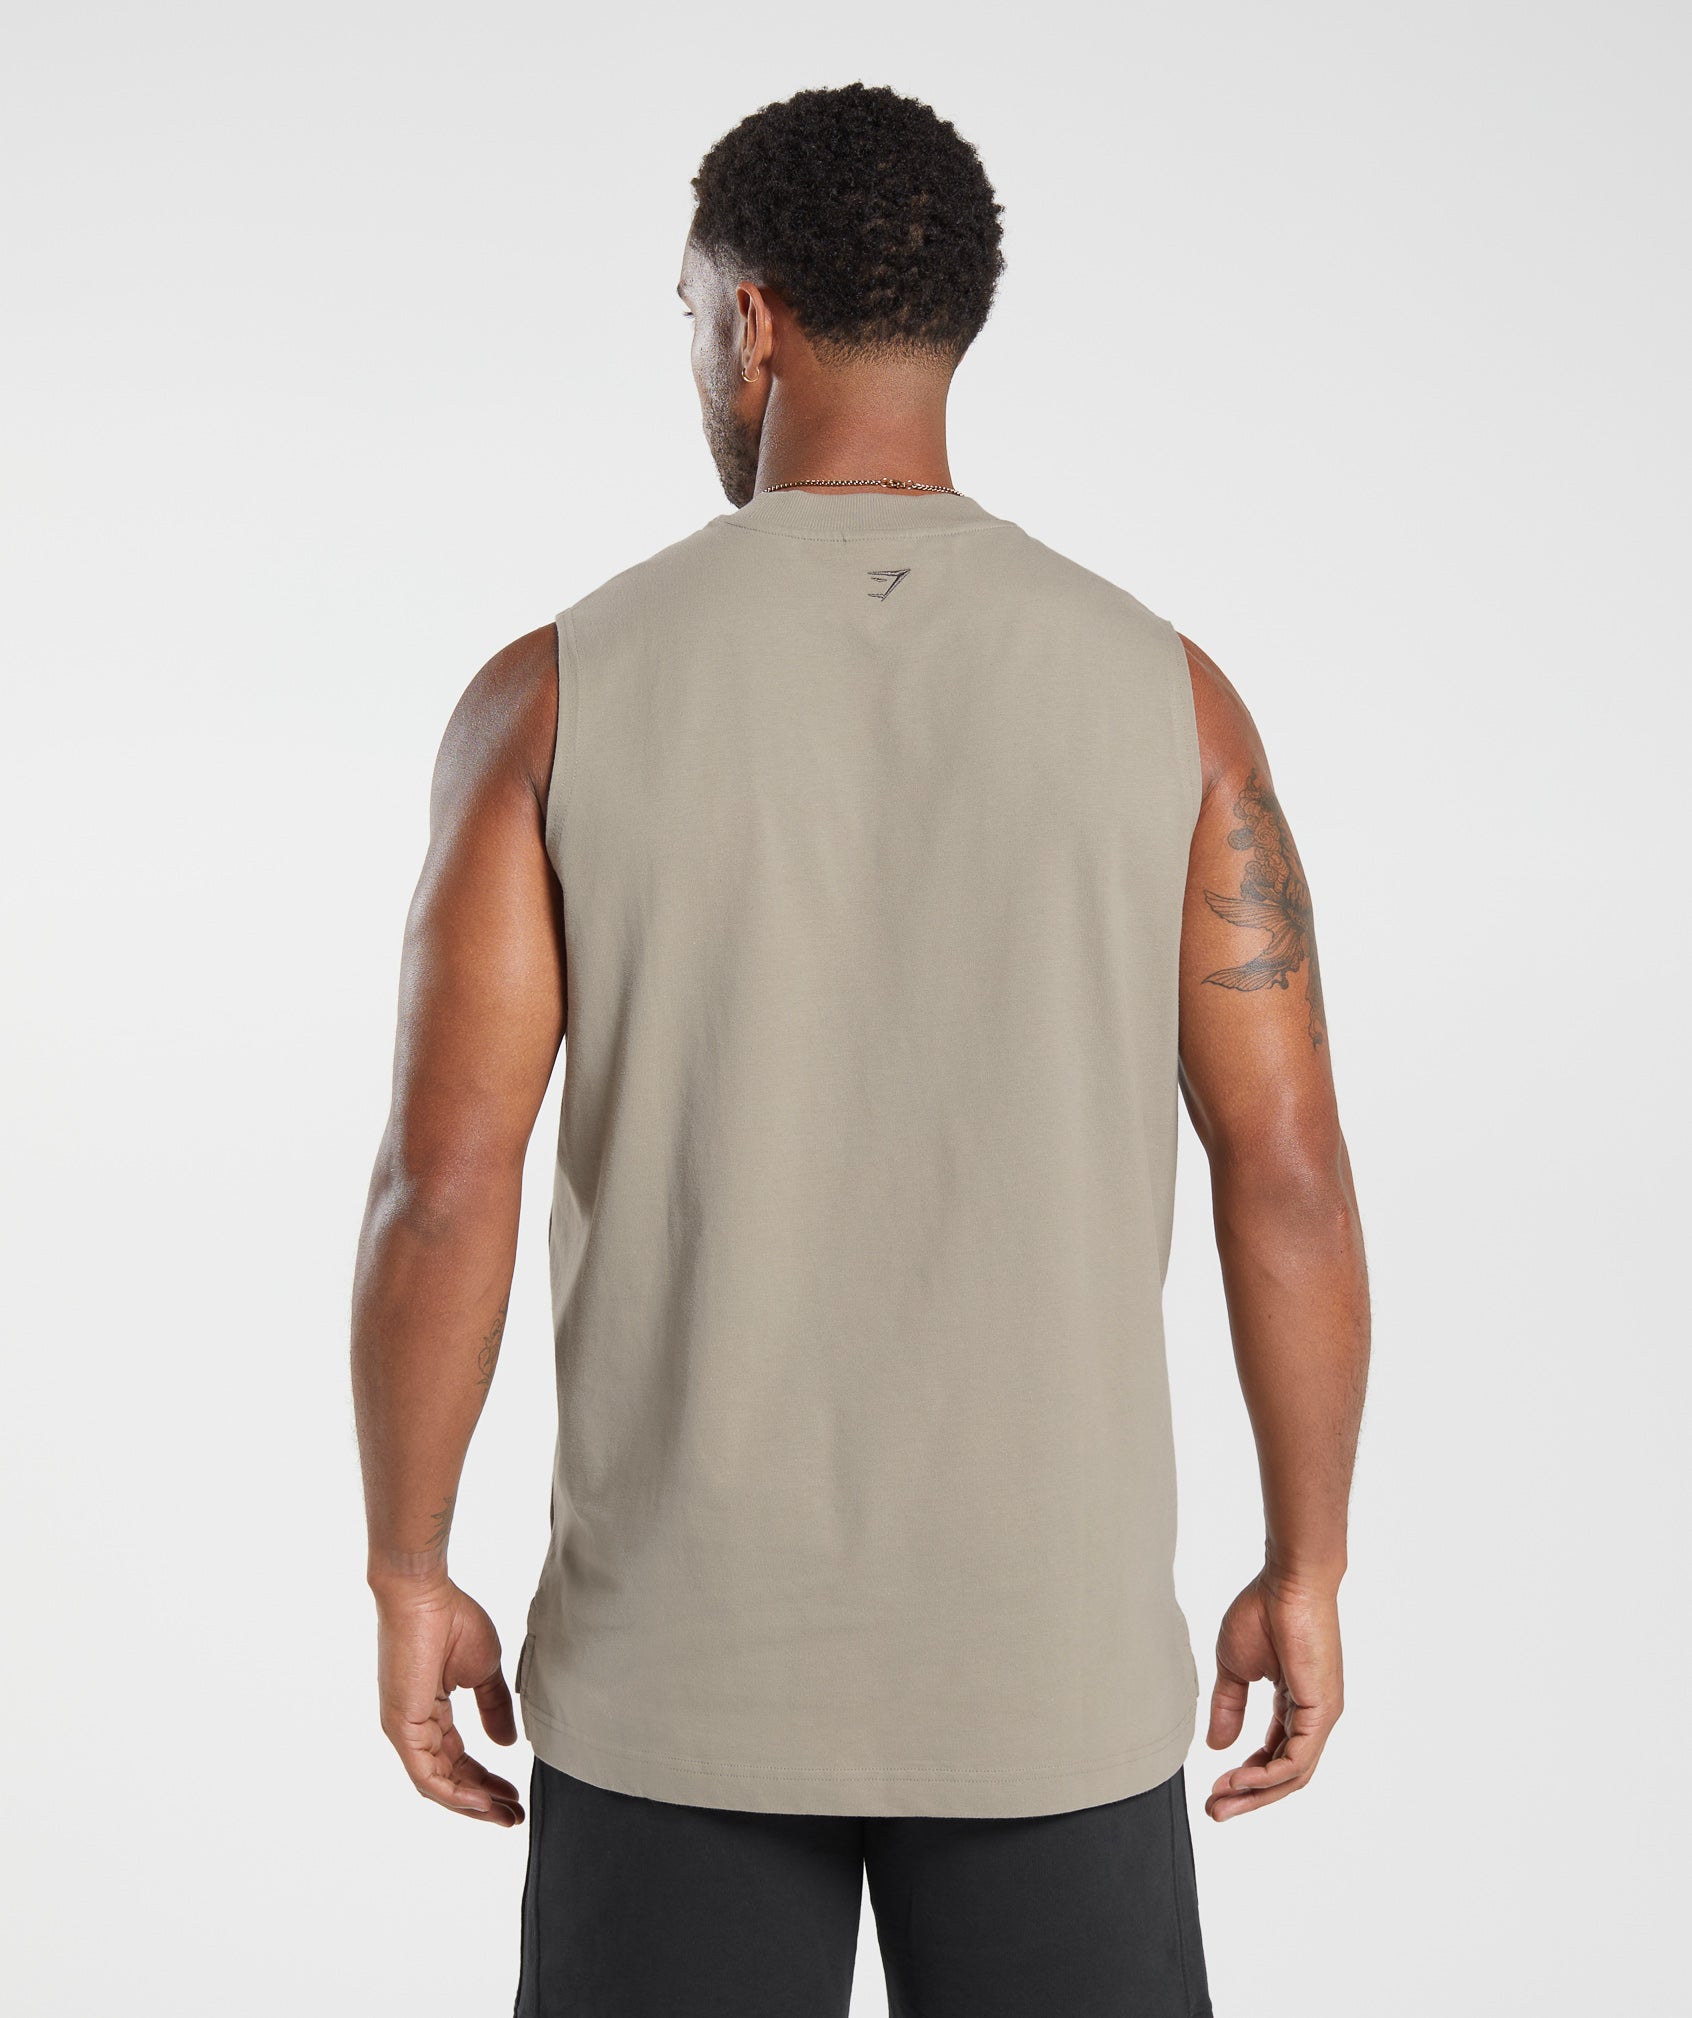 Men's Sleeveless T-Shirts, T-Shirts & Tops